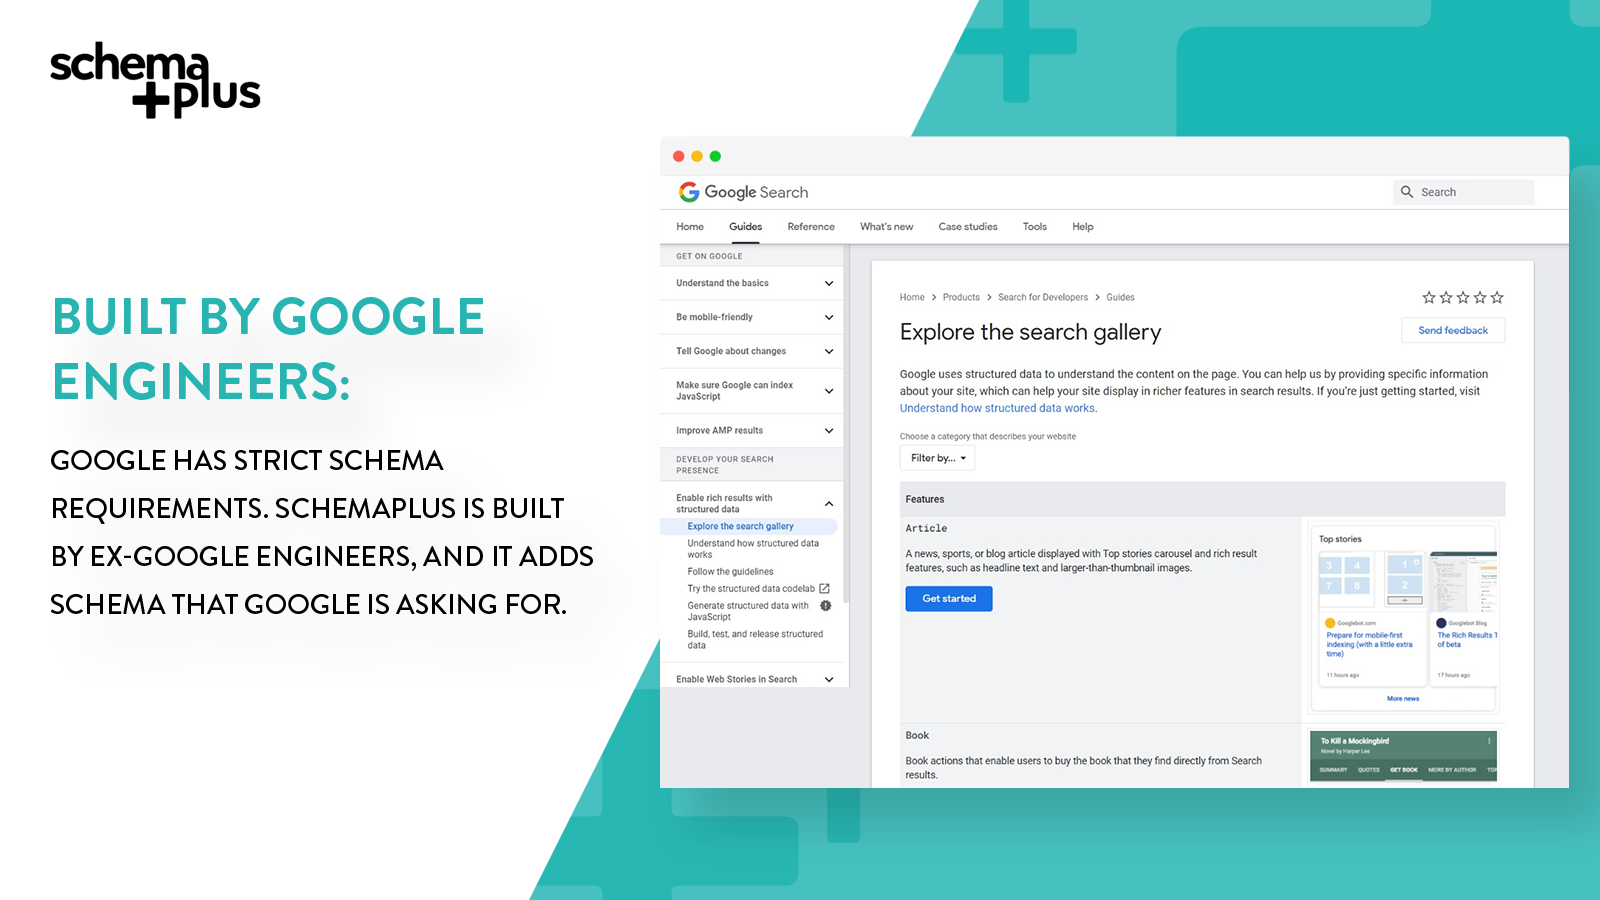 SchemaPlus is built by Google engineers